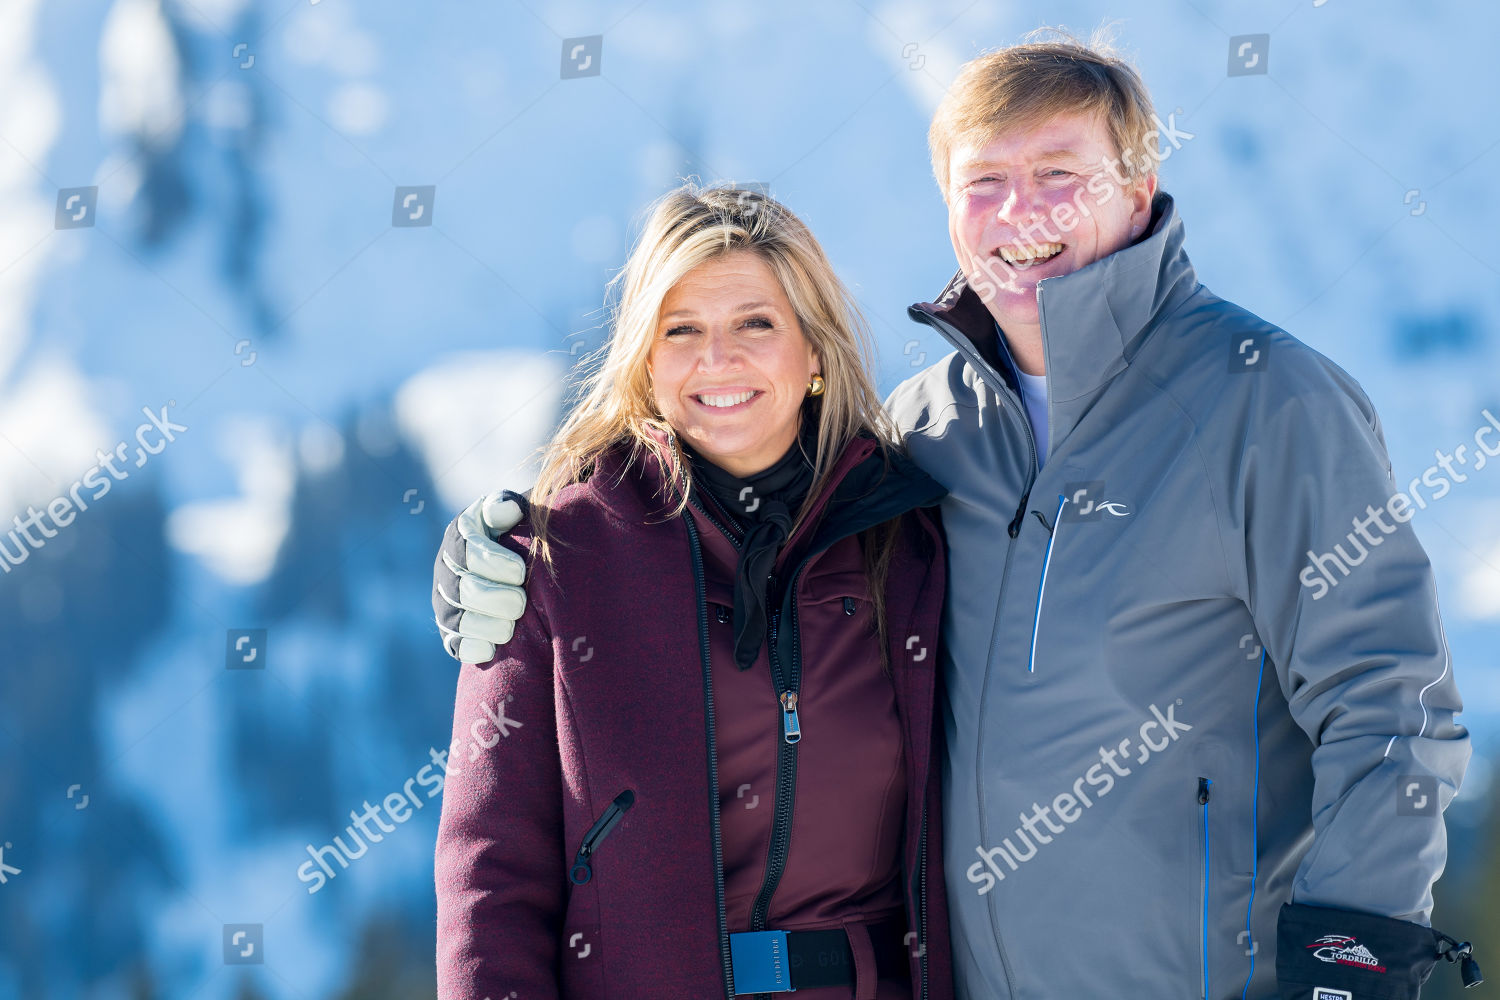 dutch-royals-winter-holiday-photocall-lech-austria-shutterstock-editorial-10118946ad.jpg